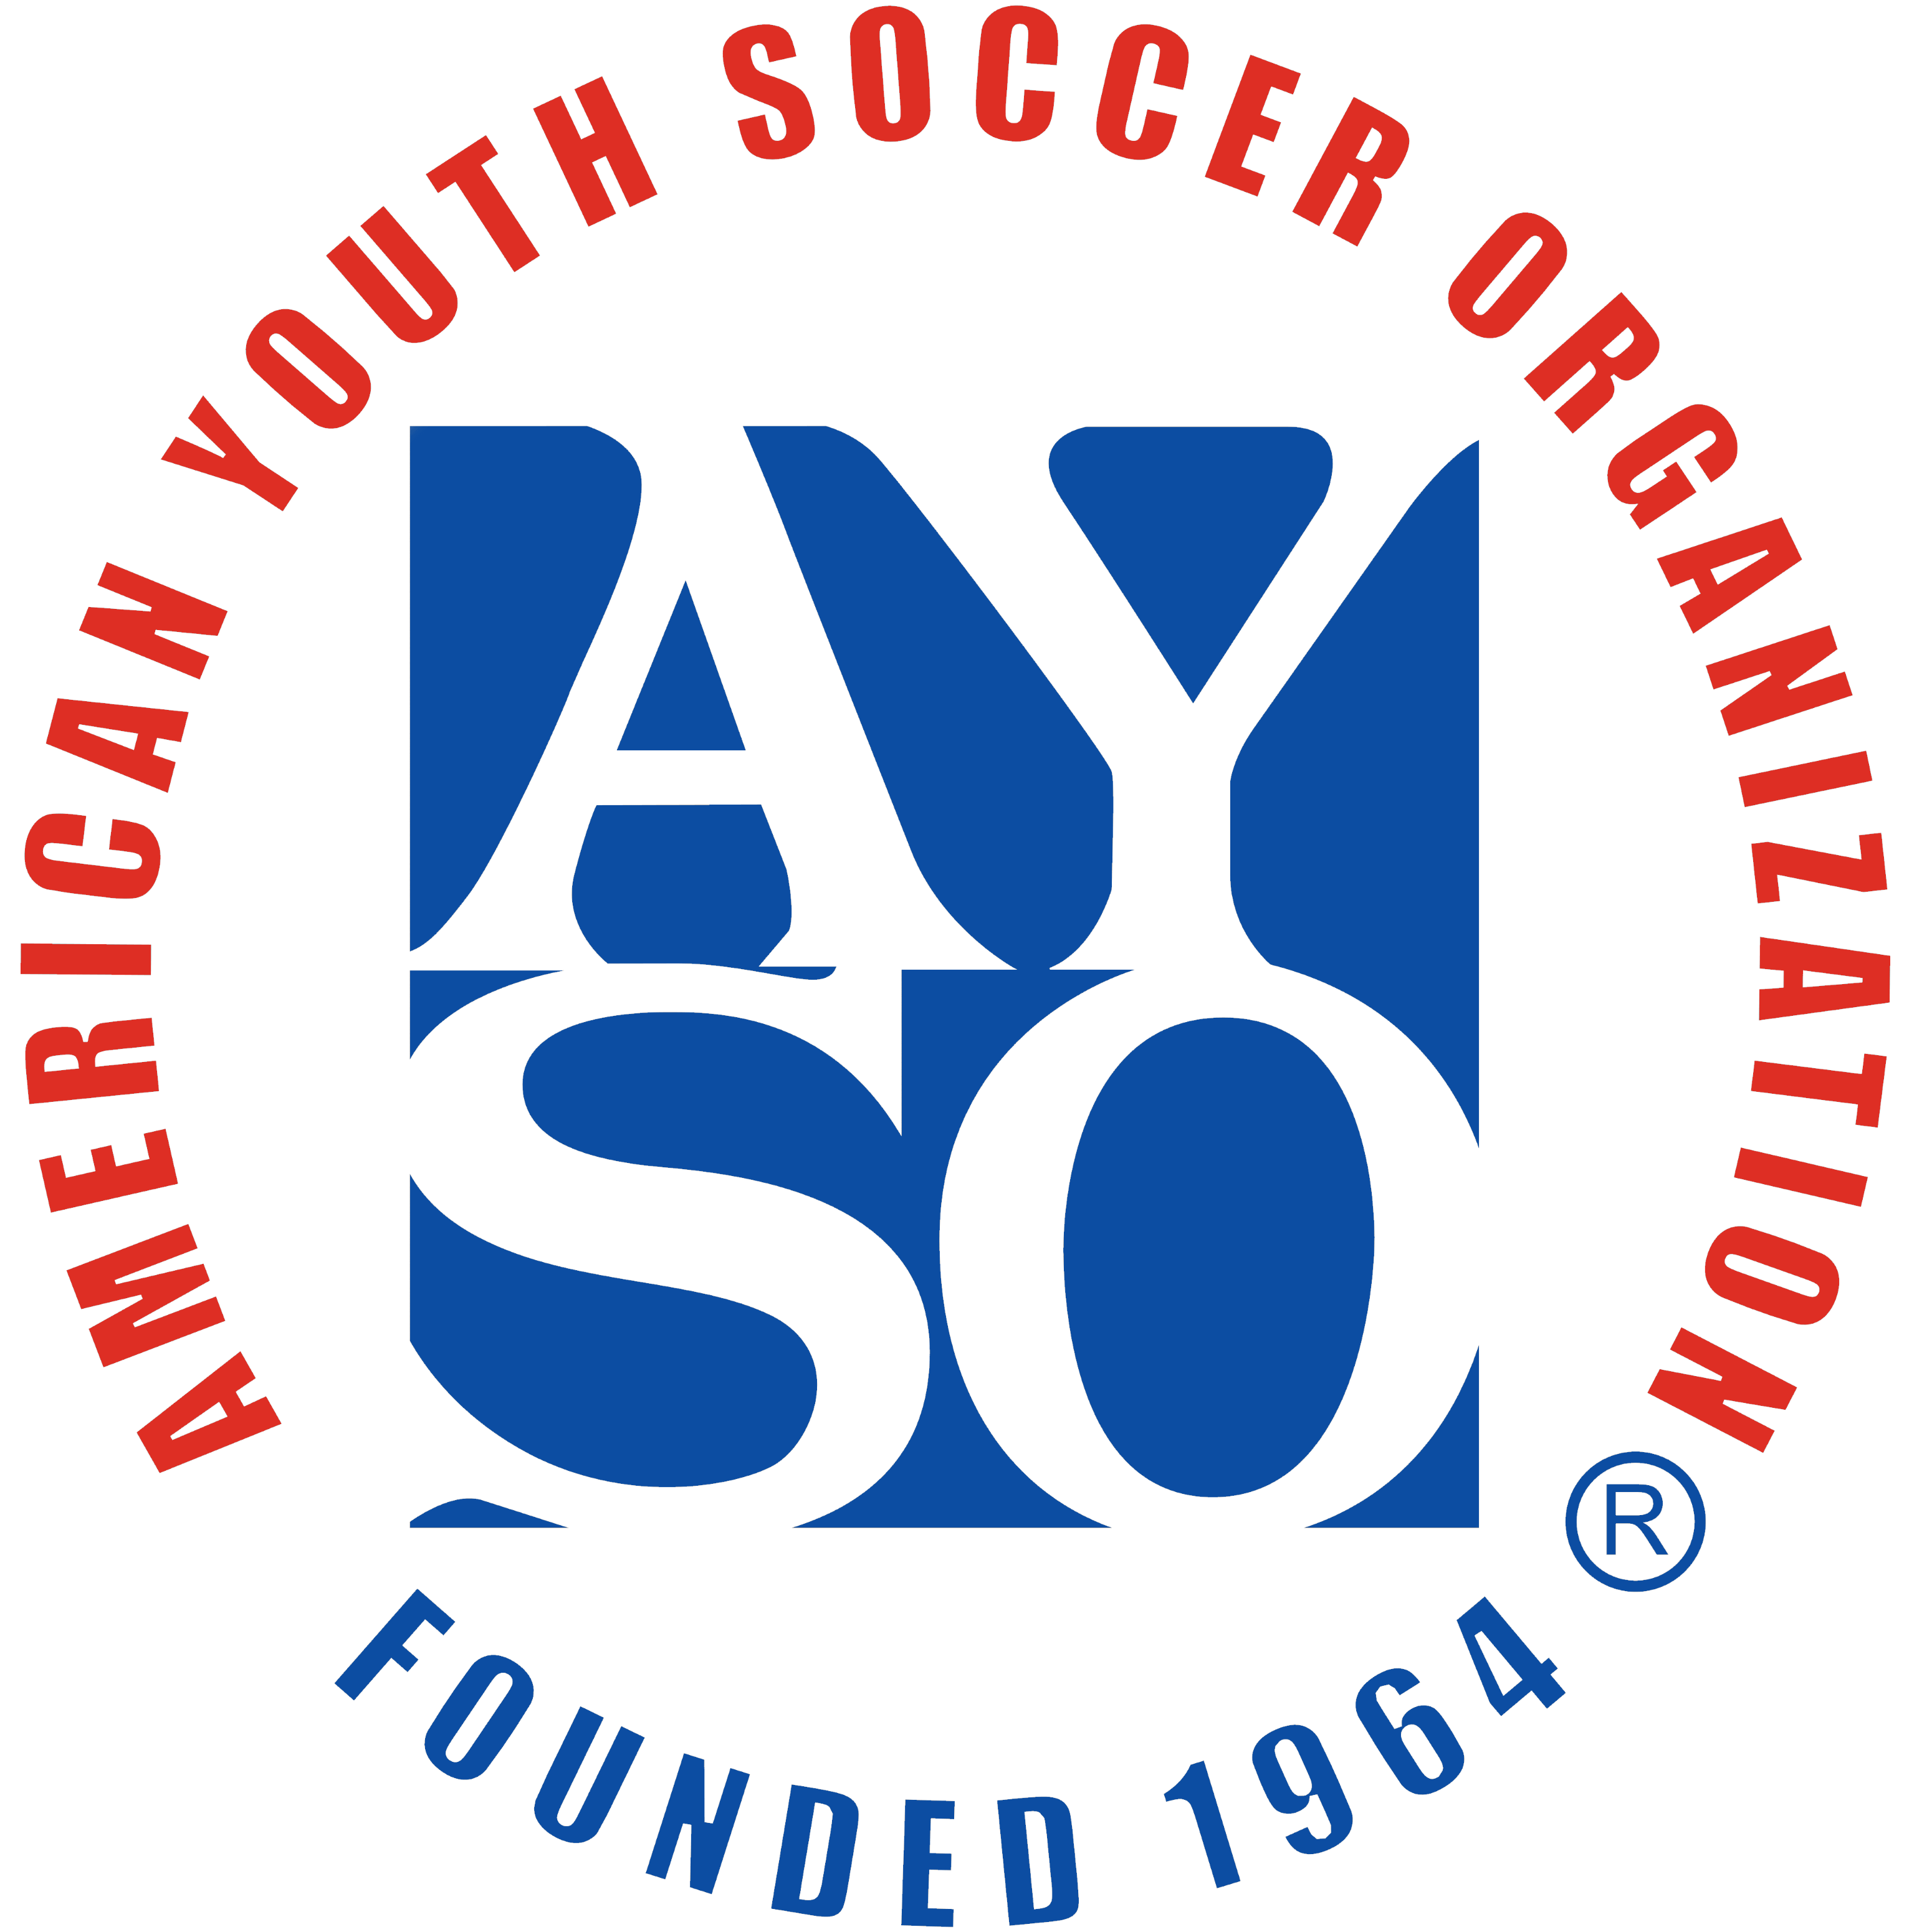 AYSO logo, logotype